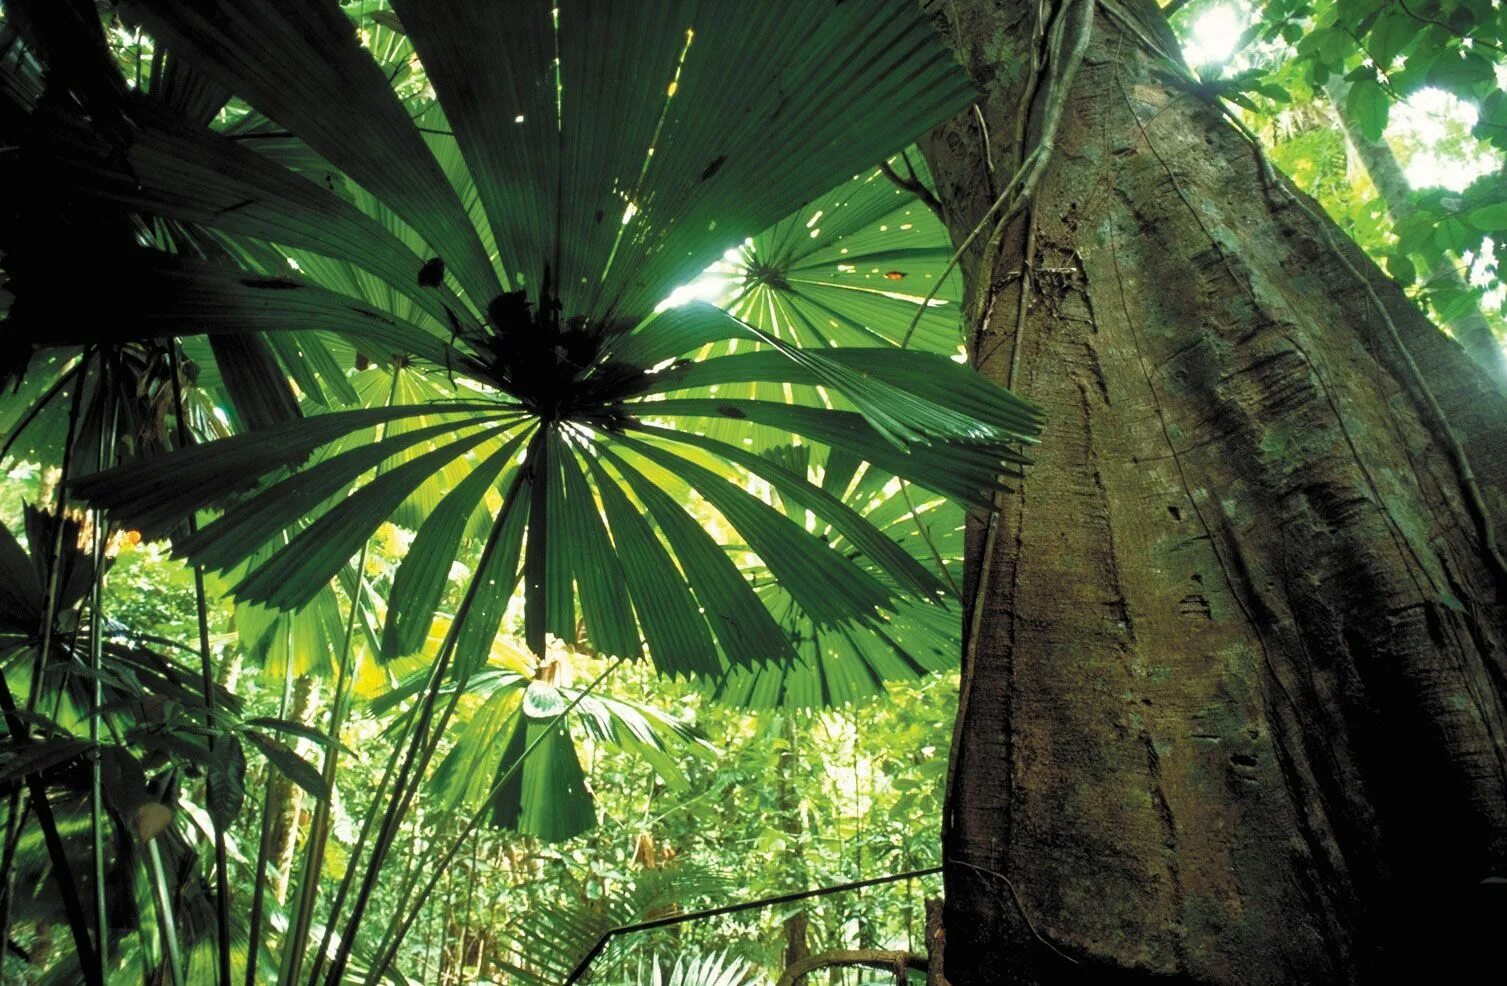 Rainforest plants. Тропические леса Борнео. Джунгли Борнео. Лианы тропического леса.